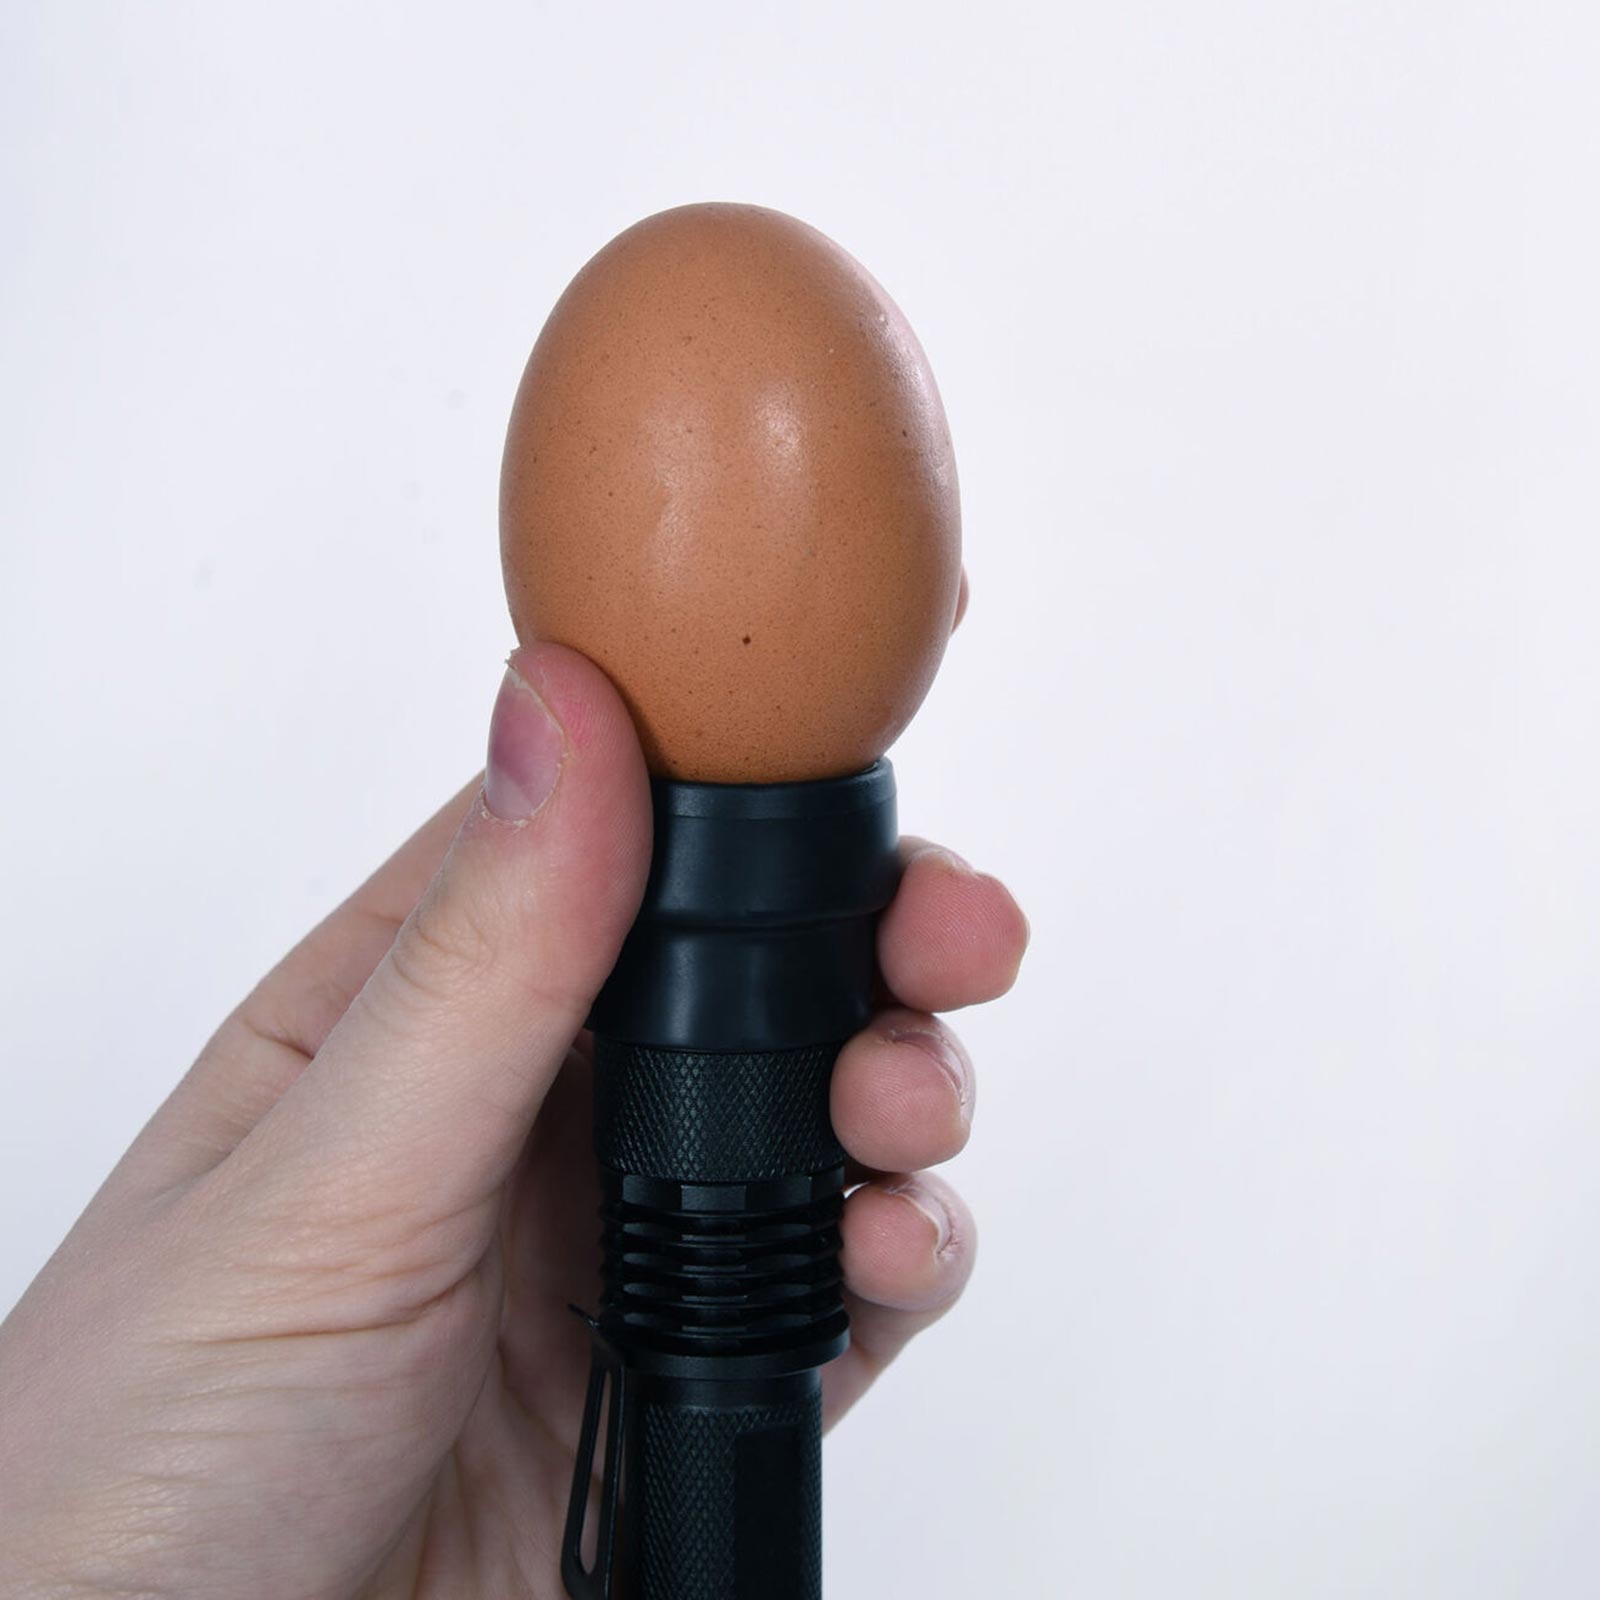 Chicken Egg Candler Poultry Hatching Egg Tester Bright LED Light Cool